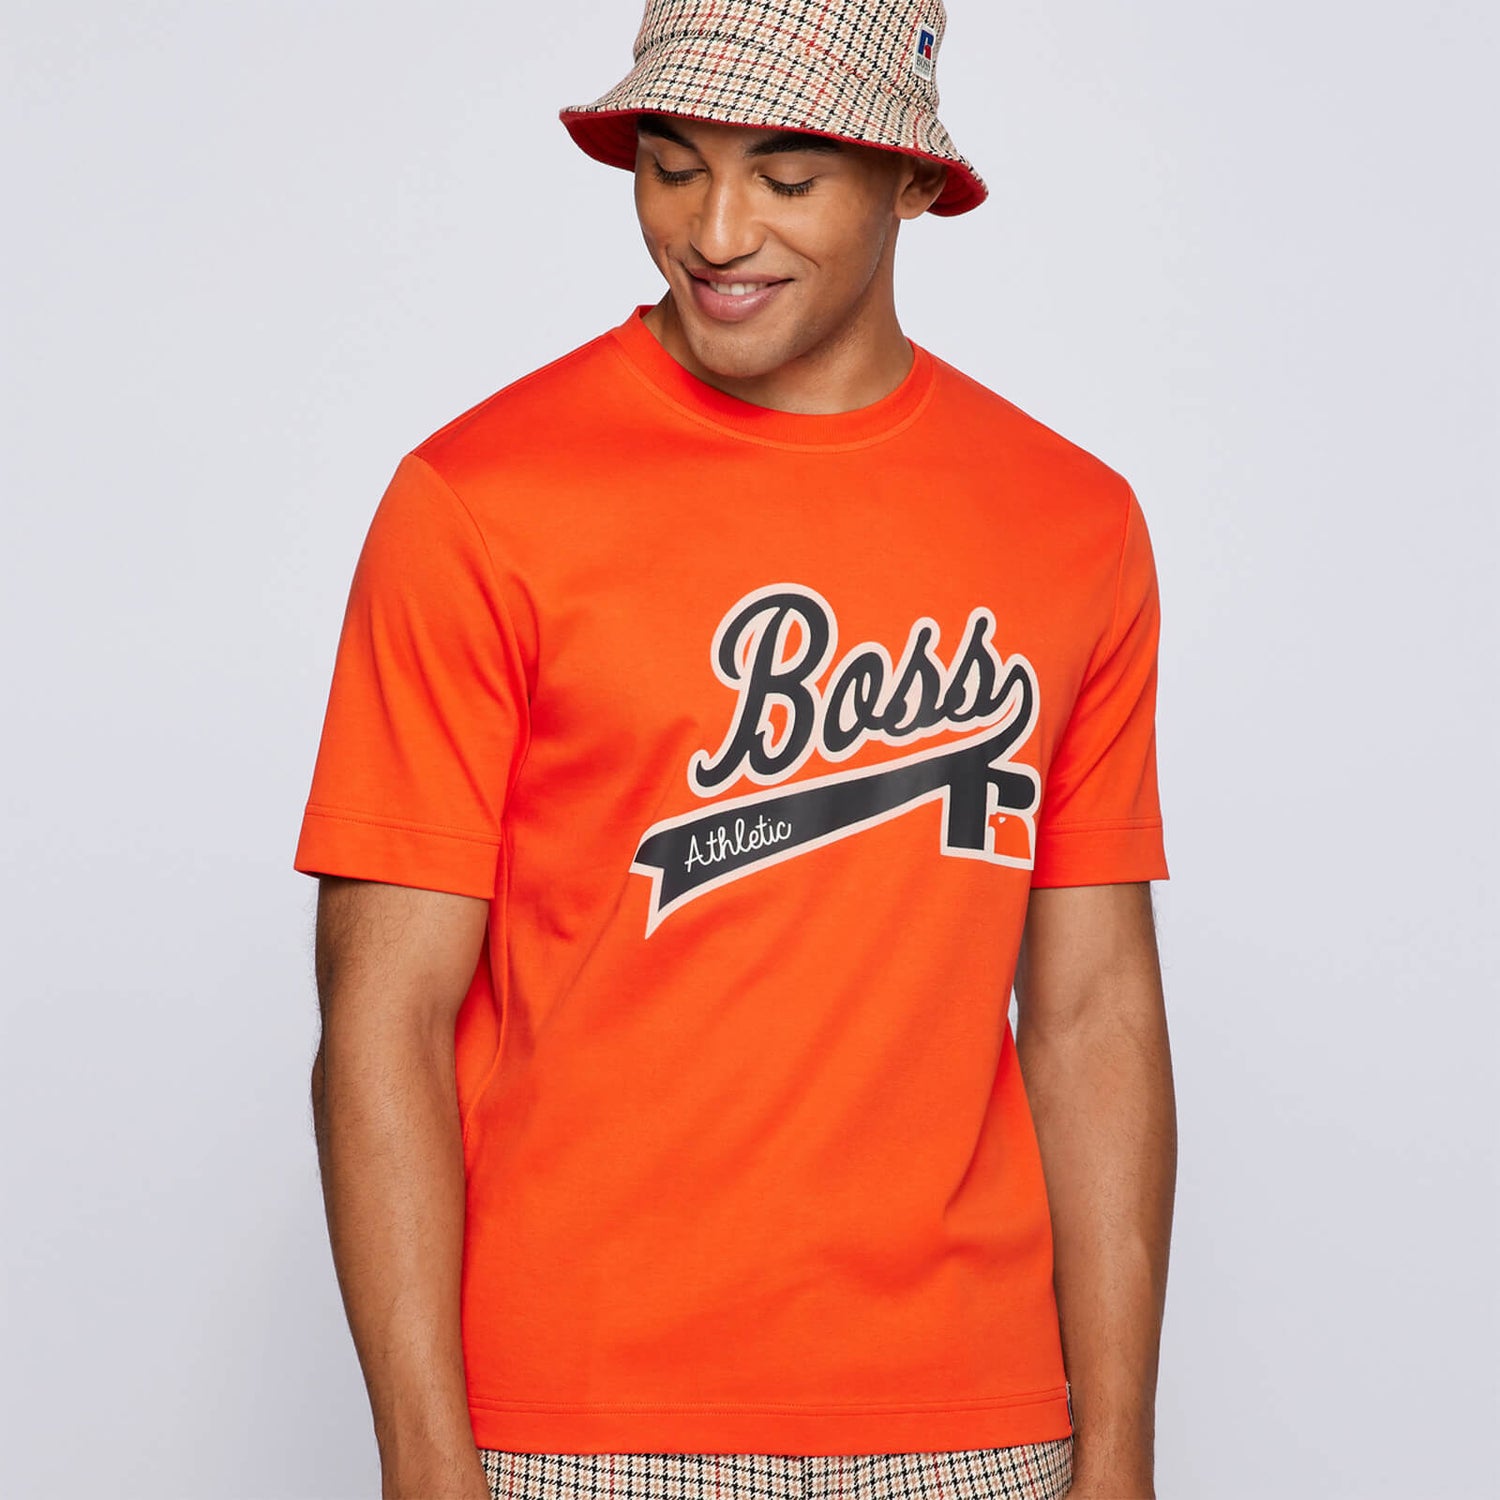 BOSS X Russell Athletic Men's Chest Logo T-Shirt - Bright Orange - S